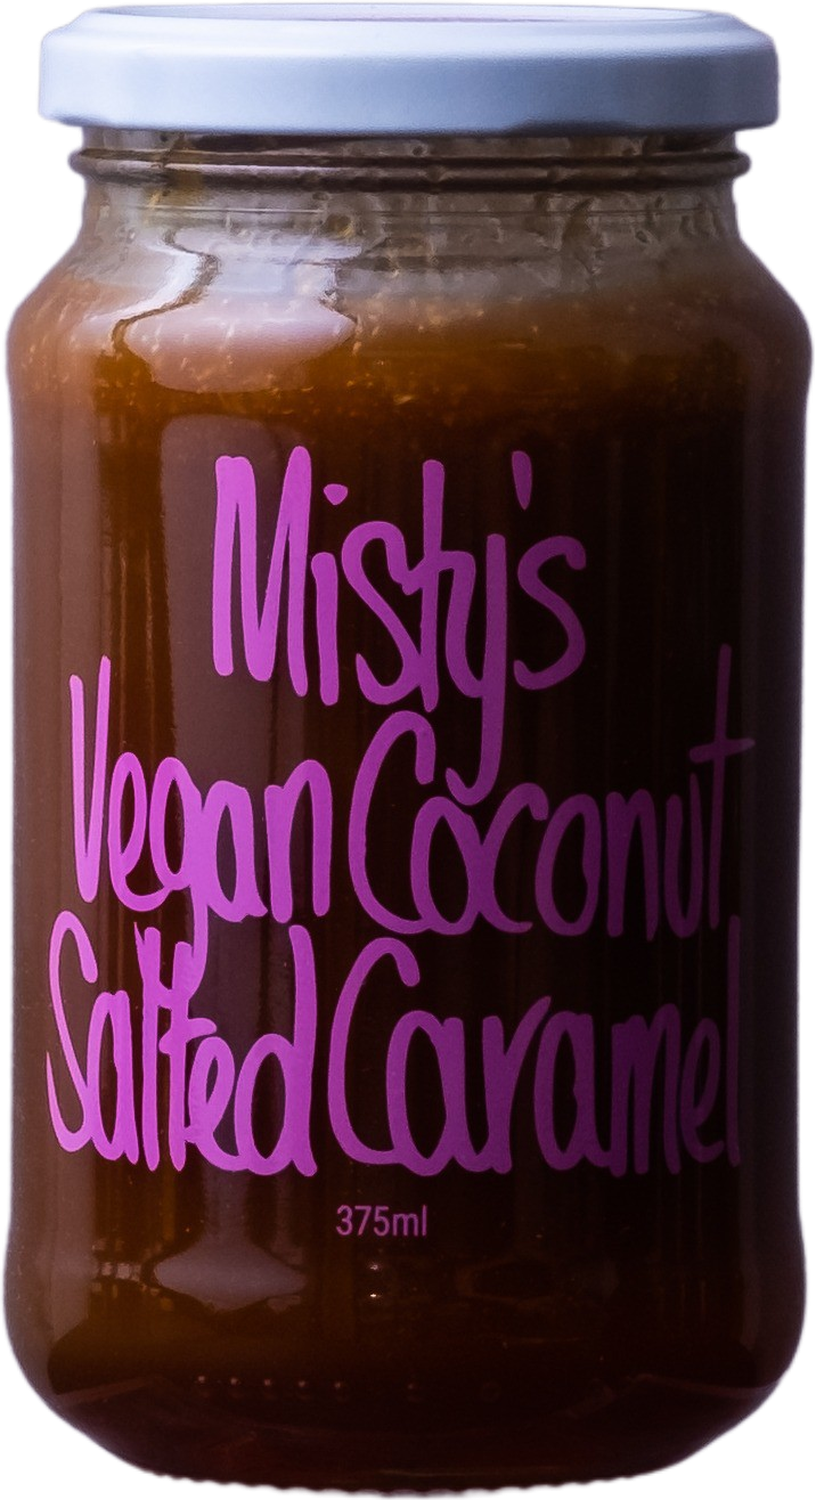 Misty's - Vegan Coconut Salted Caramel